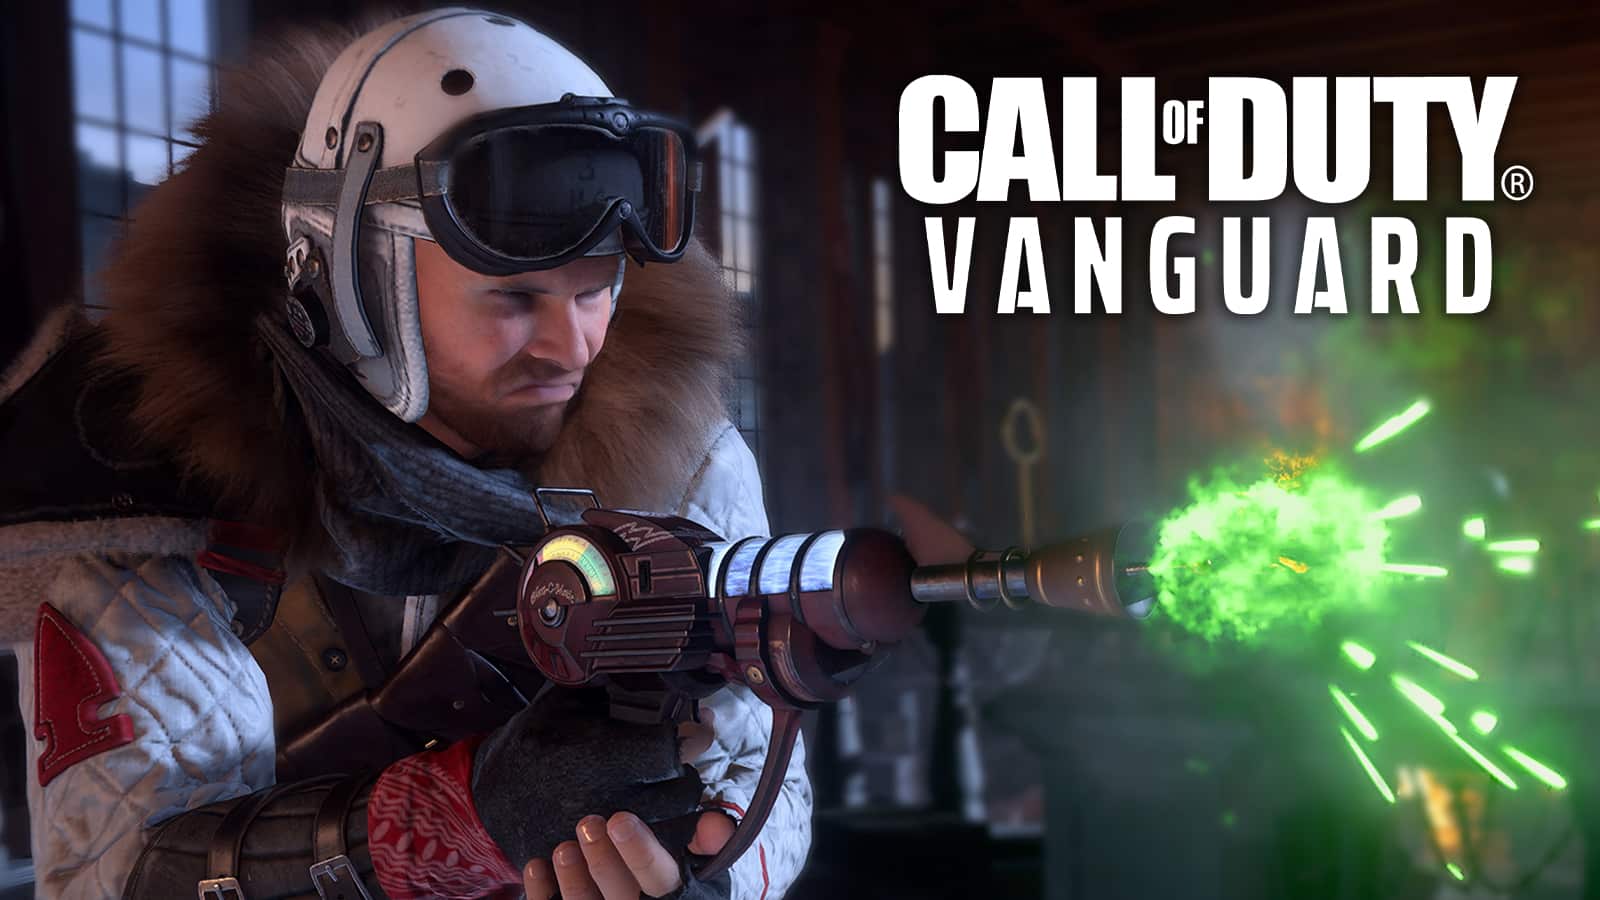 How long is Call of Duty: Vanguard?